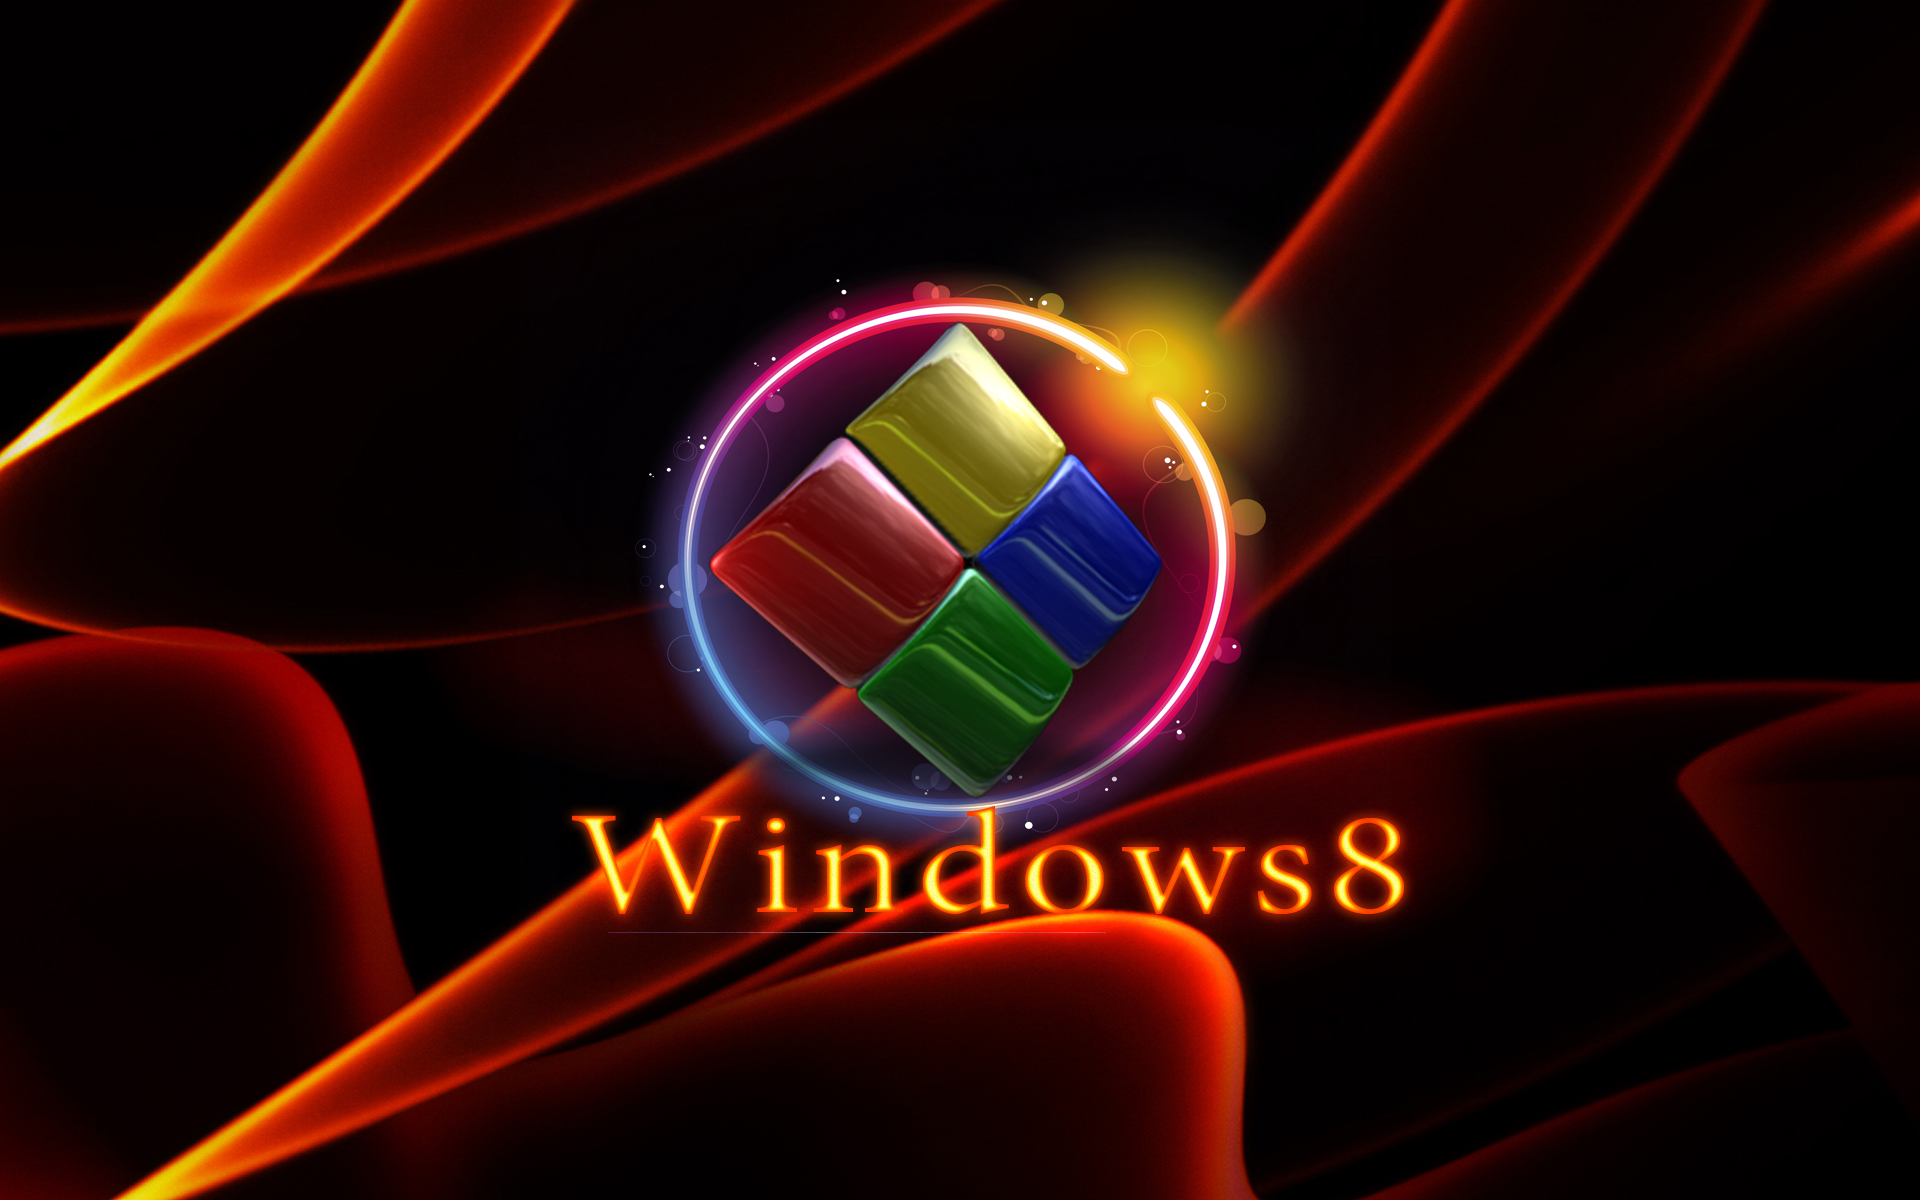 Windows 8 3d desktop background danasrfm.top